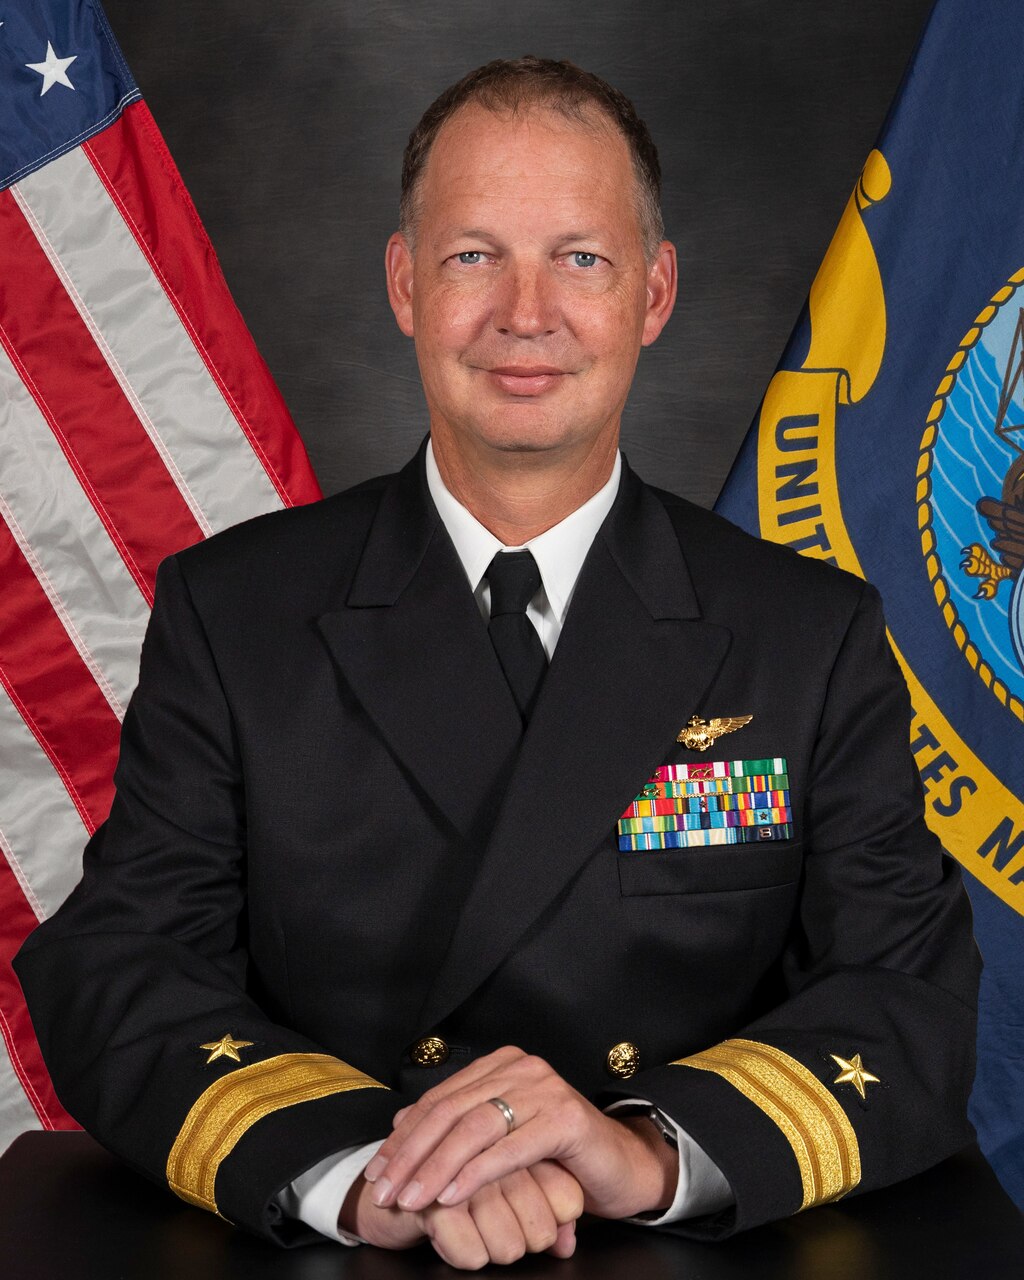 Official studio portrait for Rear Adm. William Angermann, Reserve Vice Commander, U.S. 2nd Fleet